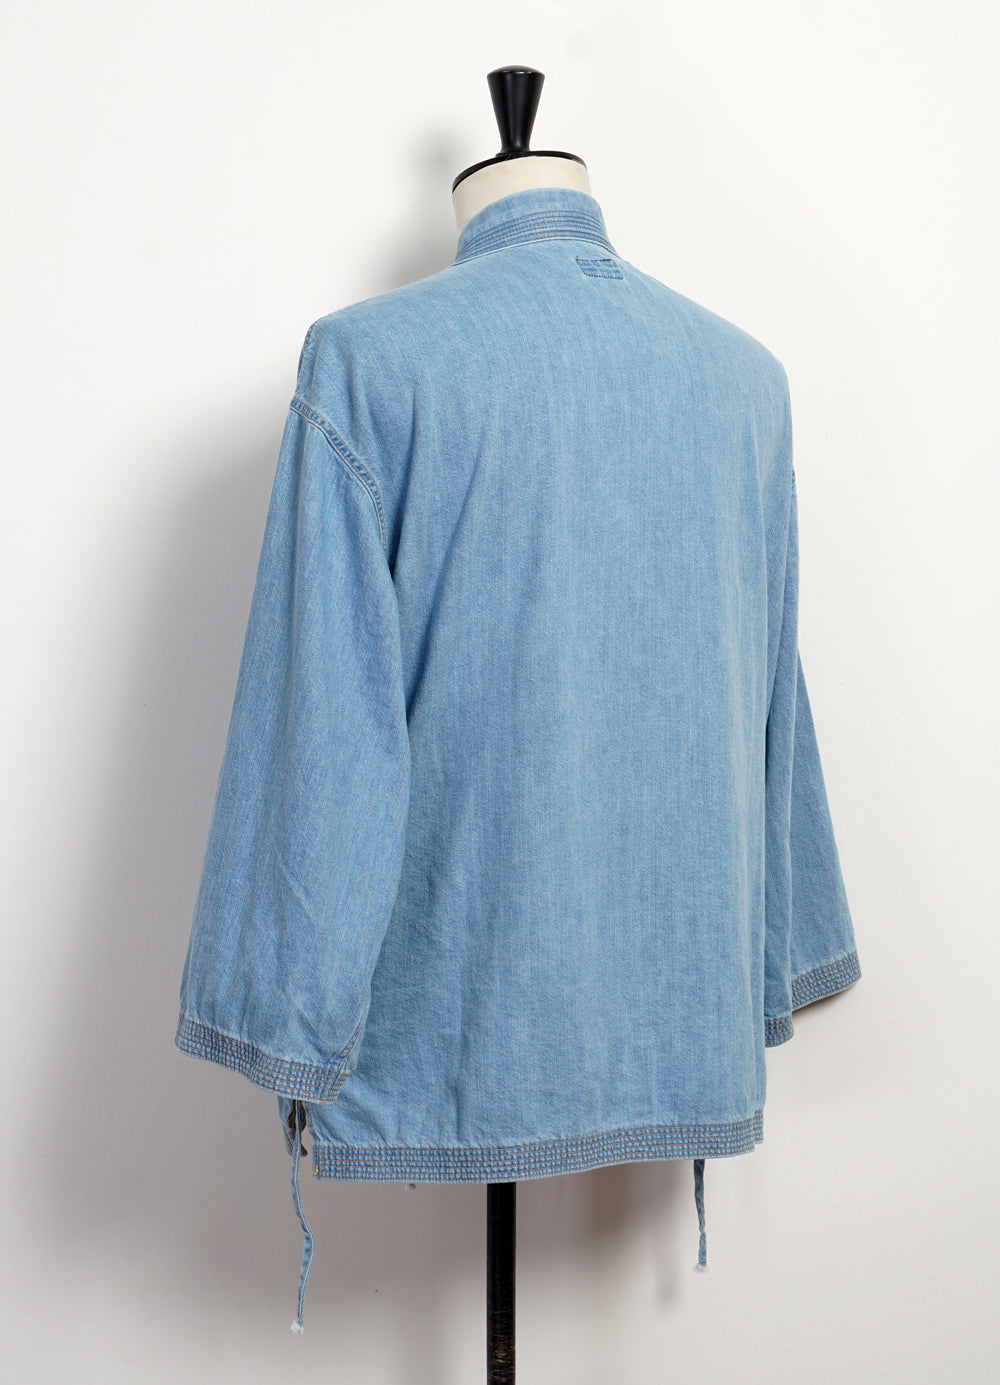 KAKASHI | 8oz Kimono-style Denim Shirt | Processed Indigo